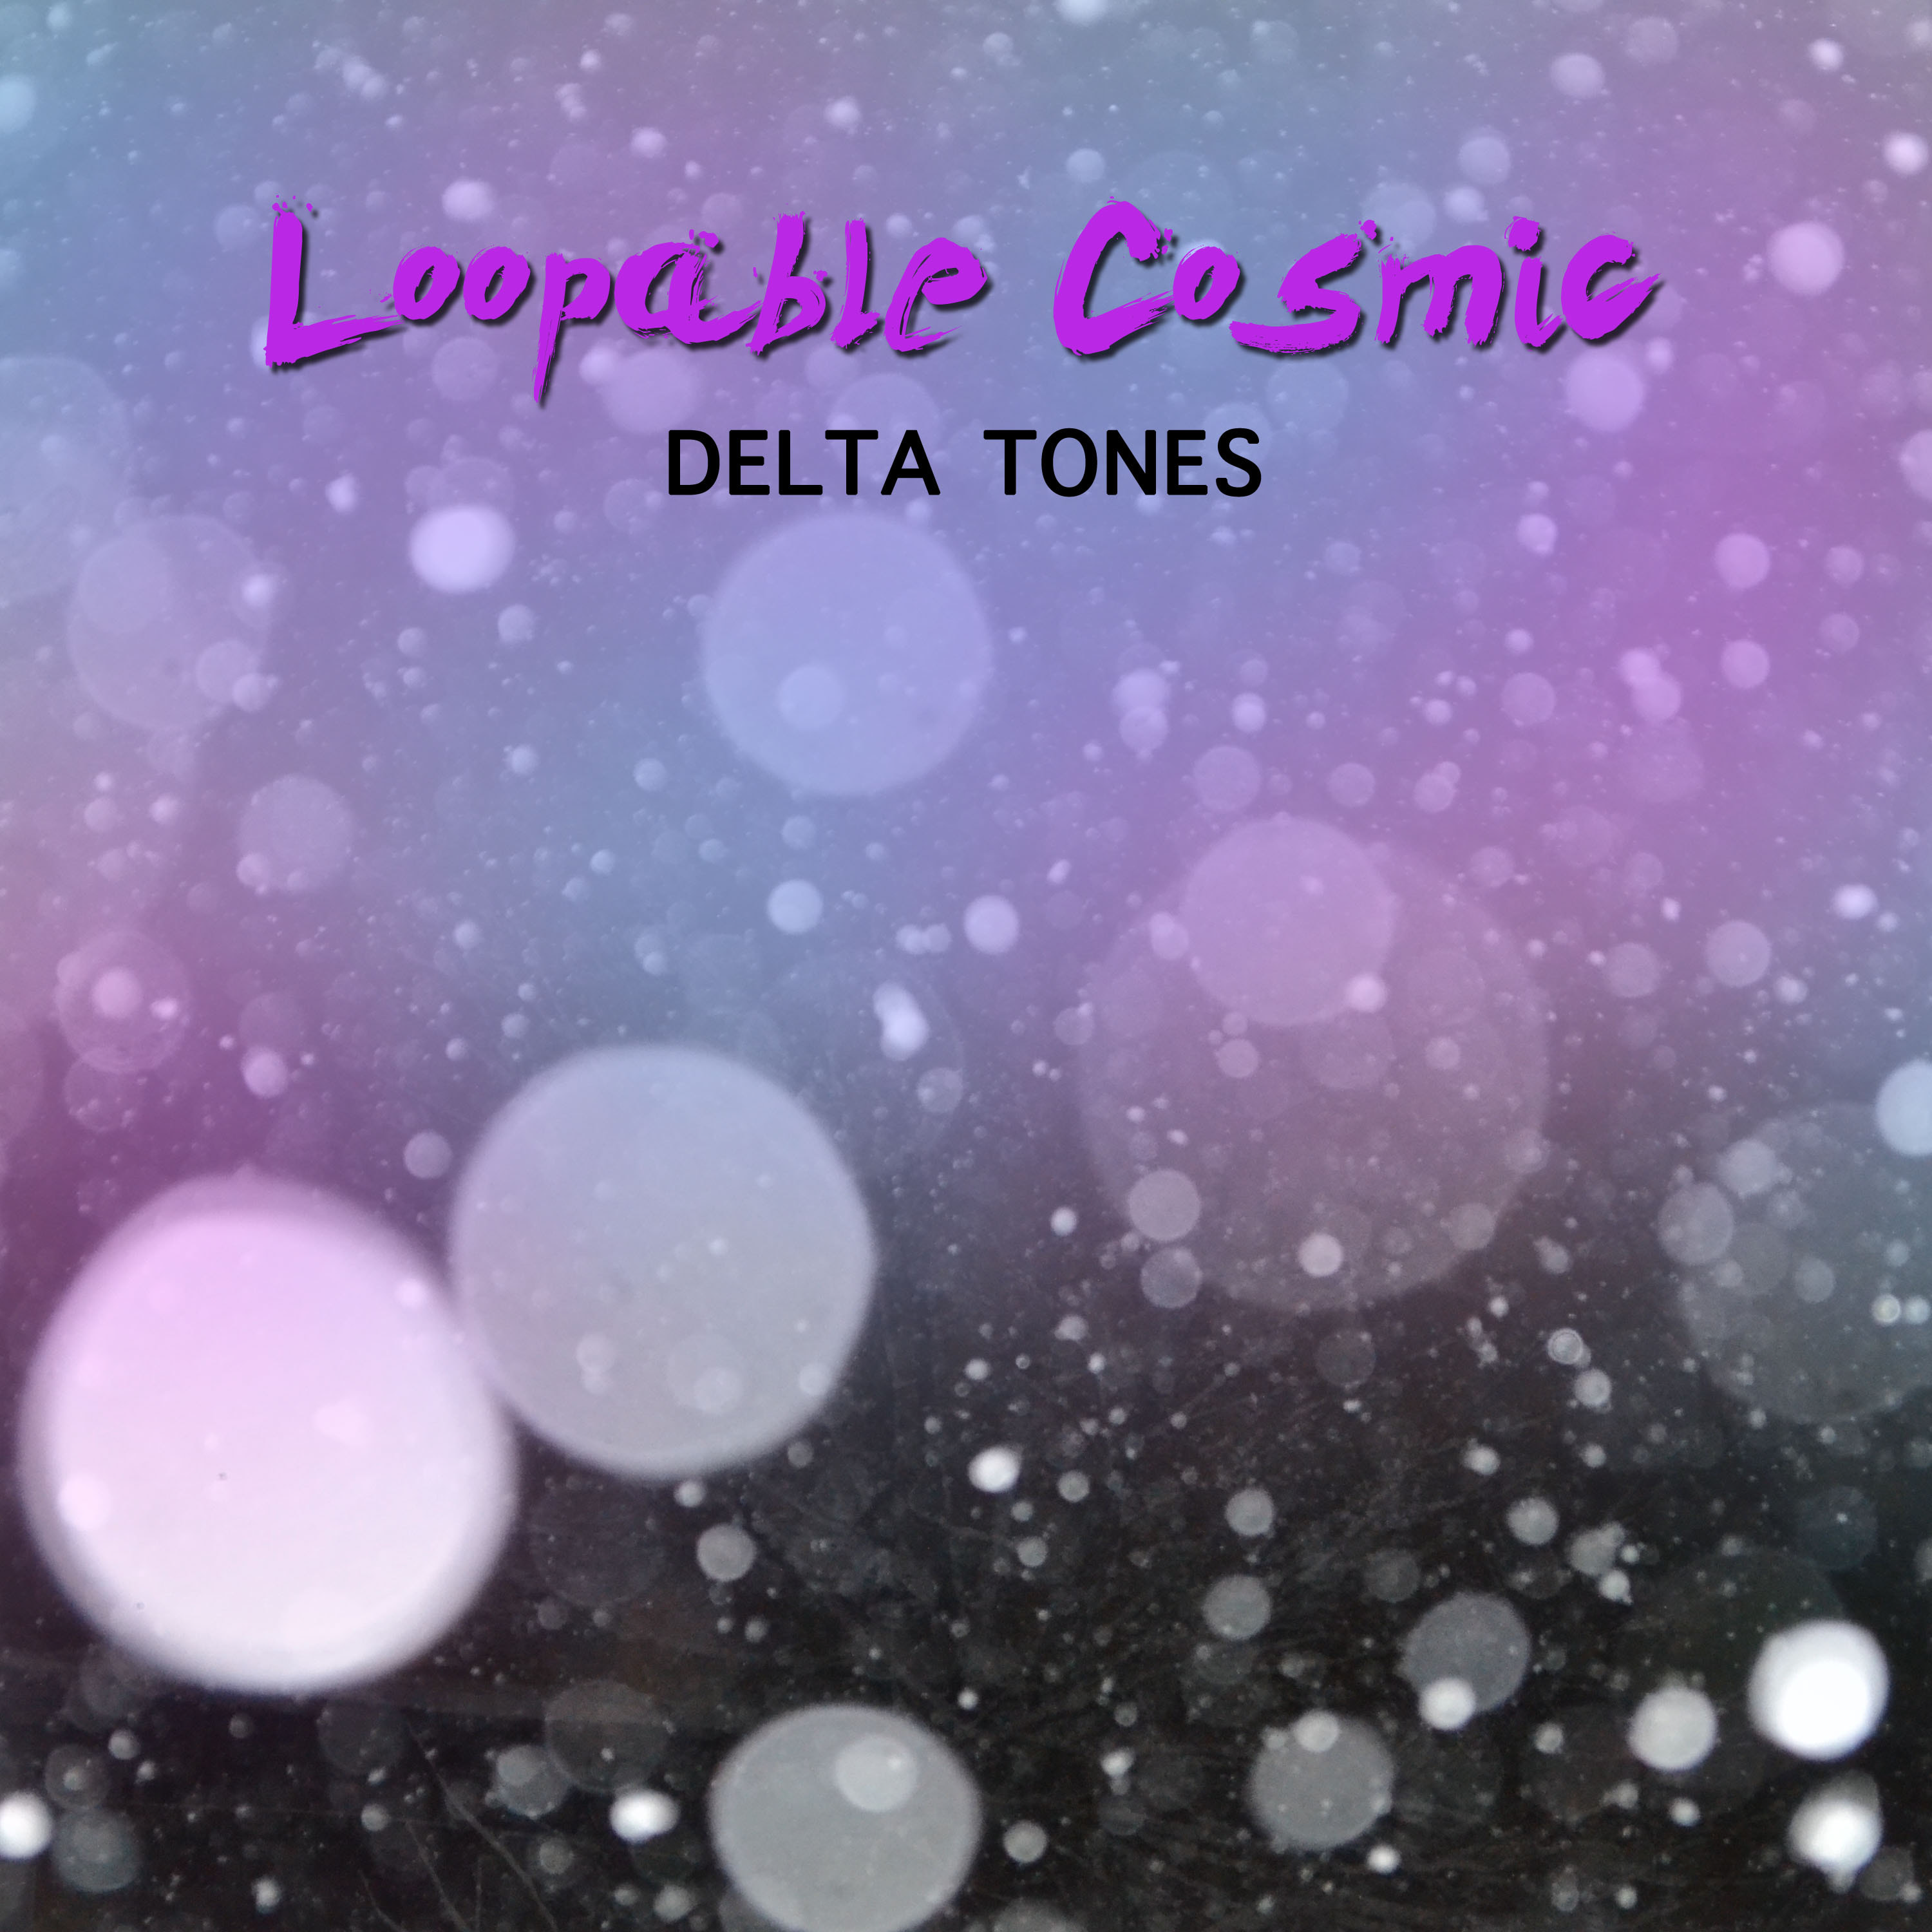 #15 Loopable Cosmic Delta Tones